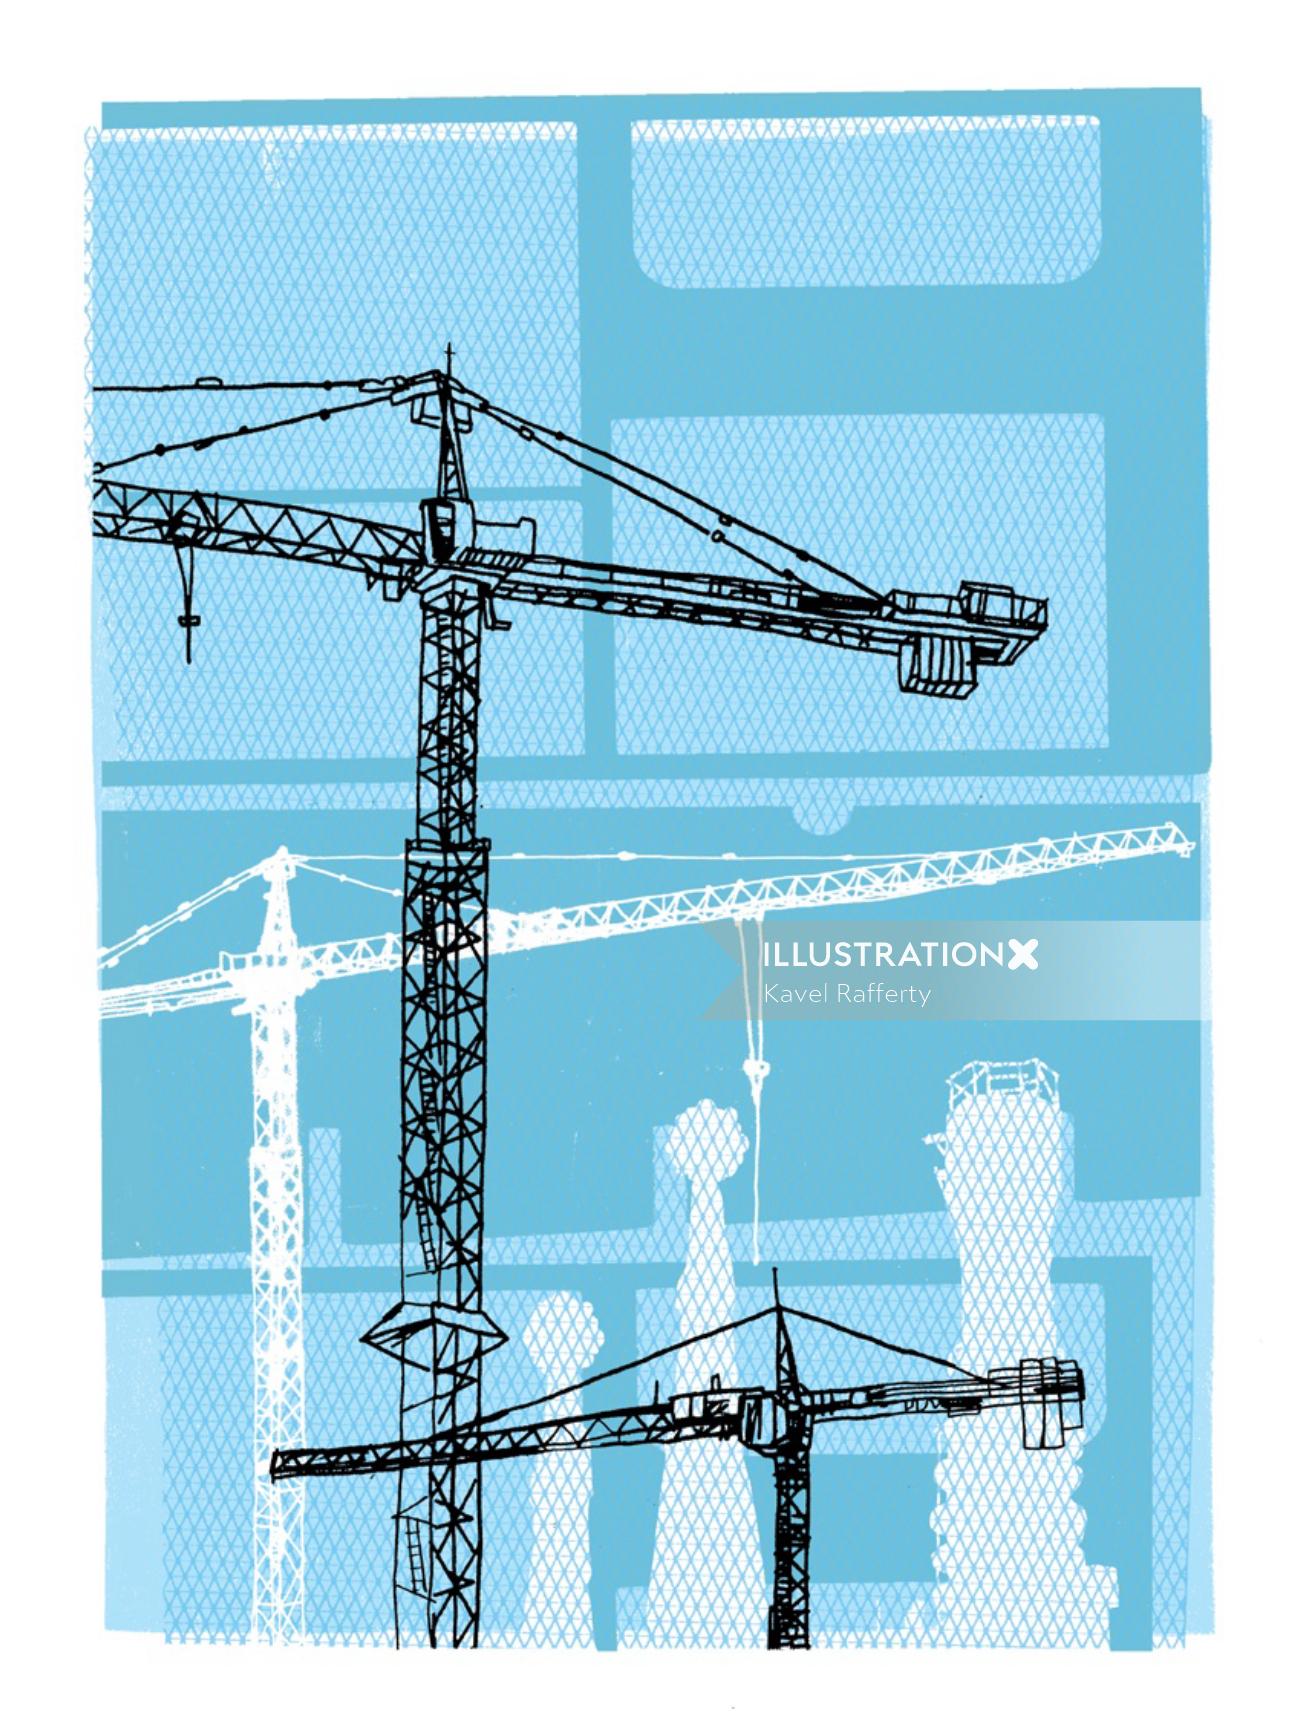 Construction industry Tower Crane illustration